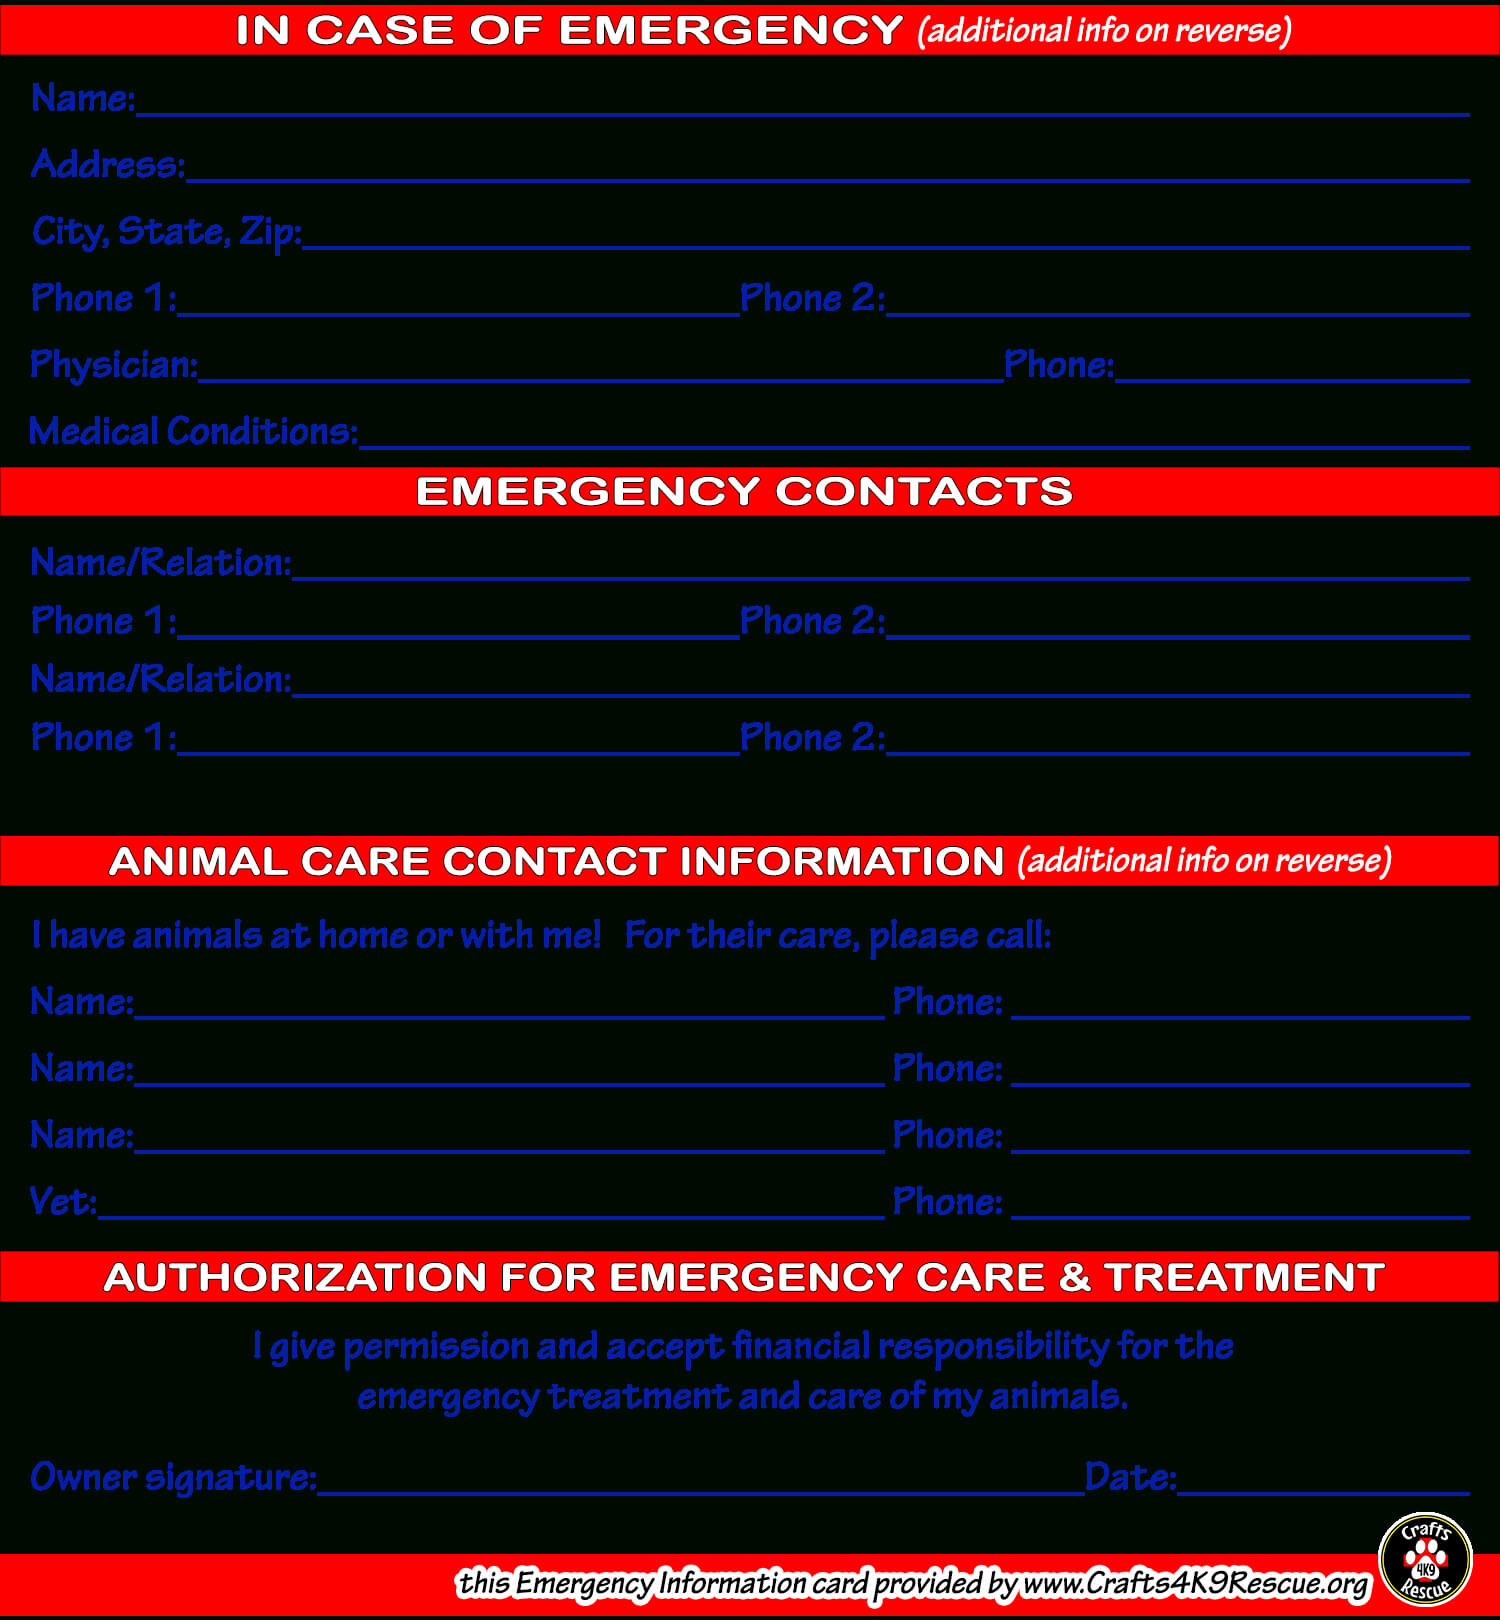 Emergency Information Card Template | Crafts4K9Rescue Within In Case Of Emergency Card Template